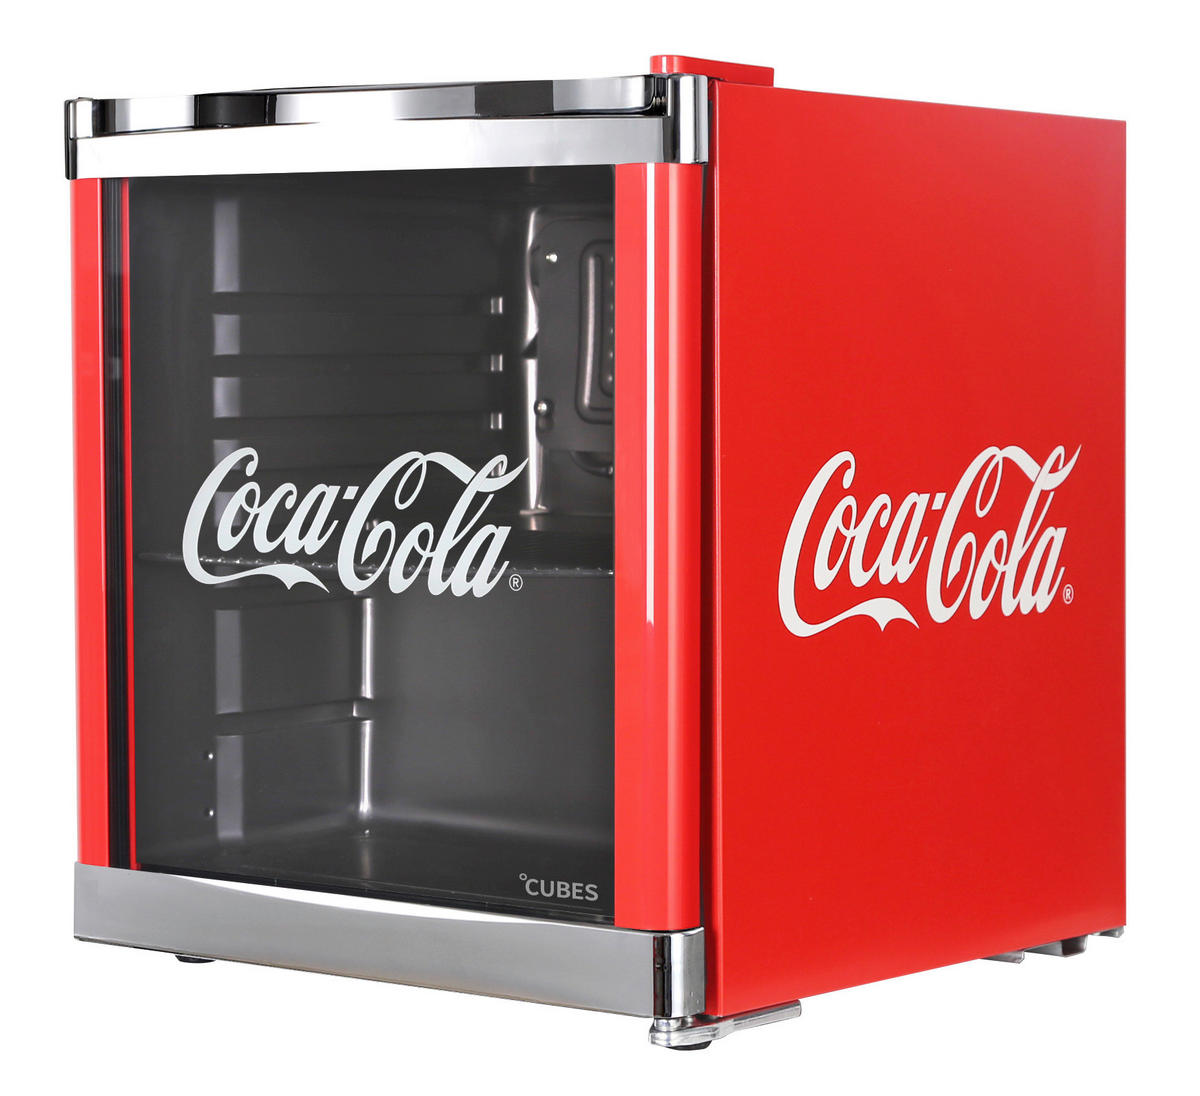 Coca-Cola® Mini Kühlschrank 20L Dometic 12V 230V AC/DC Kühlen und Wärmen  MBF-20